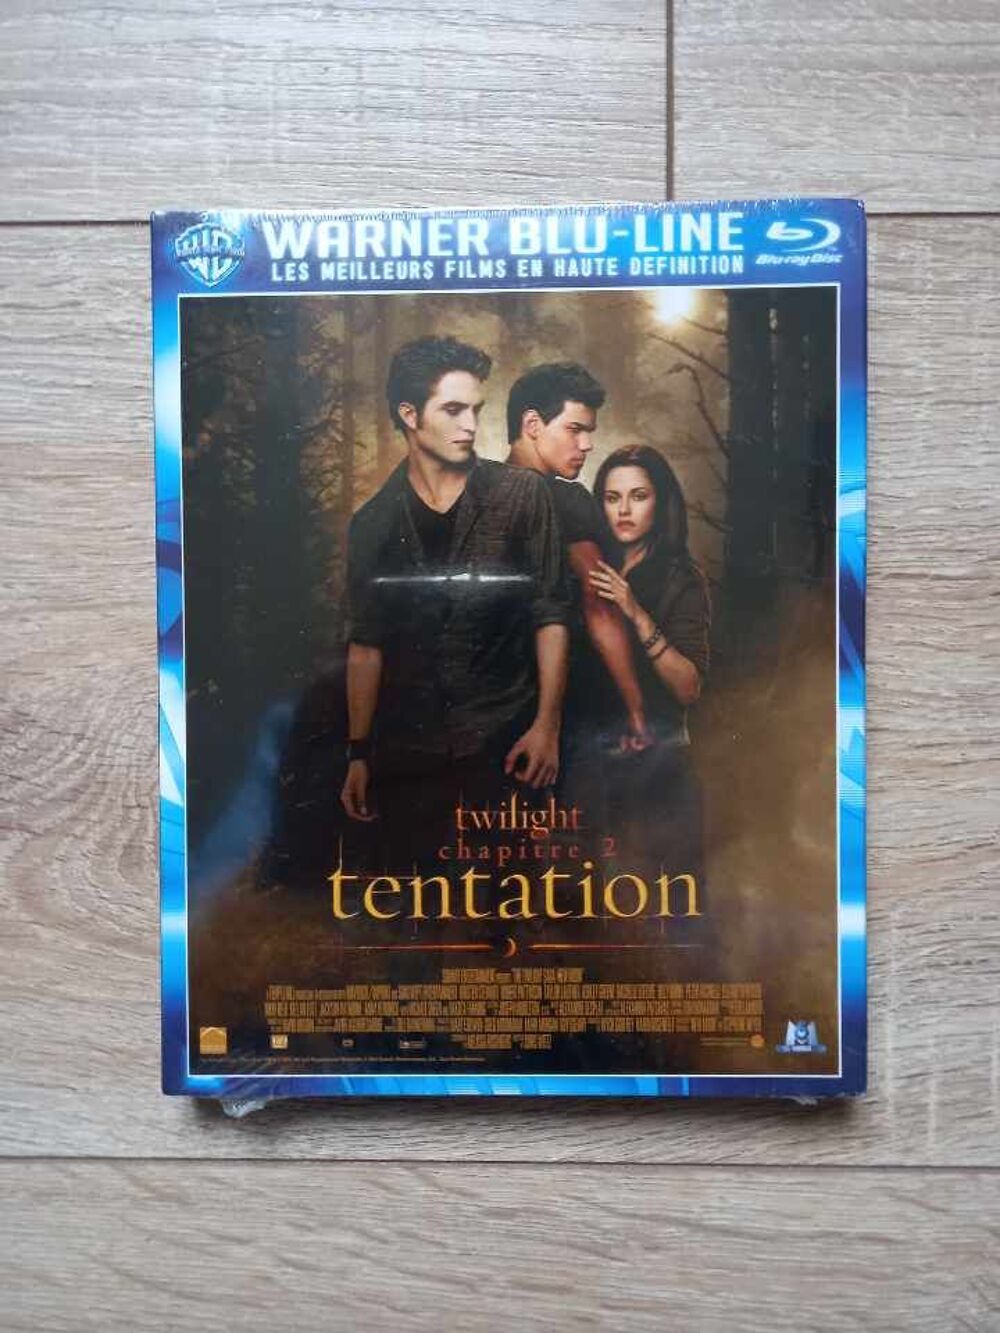 Dvd Blu-ray Twilight - Chapitre 2 : Tentation - neuf DVD et blu-ray